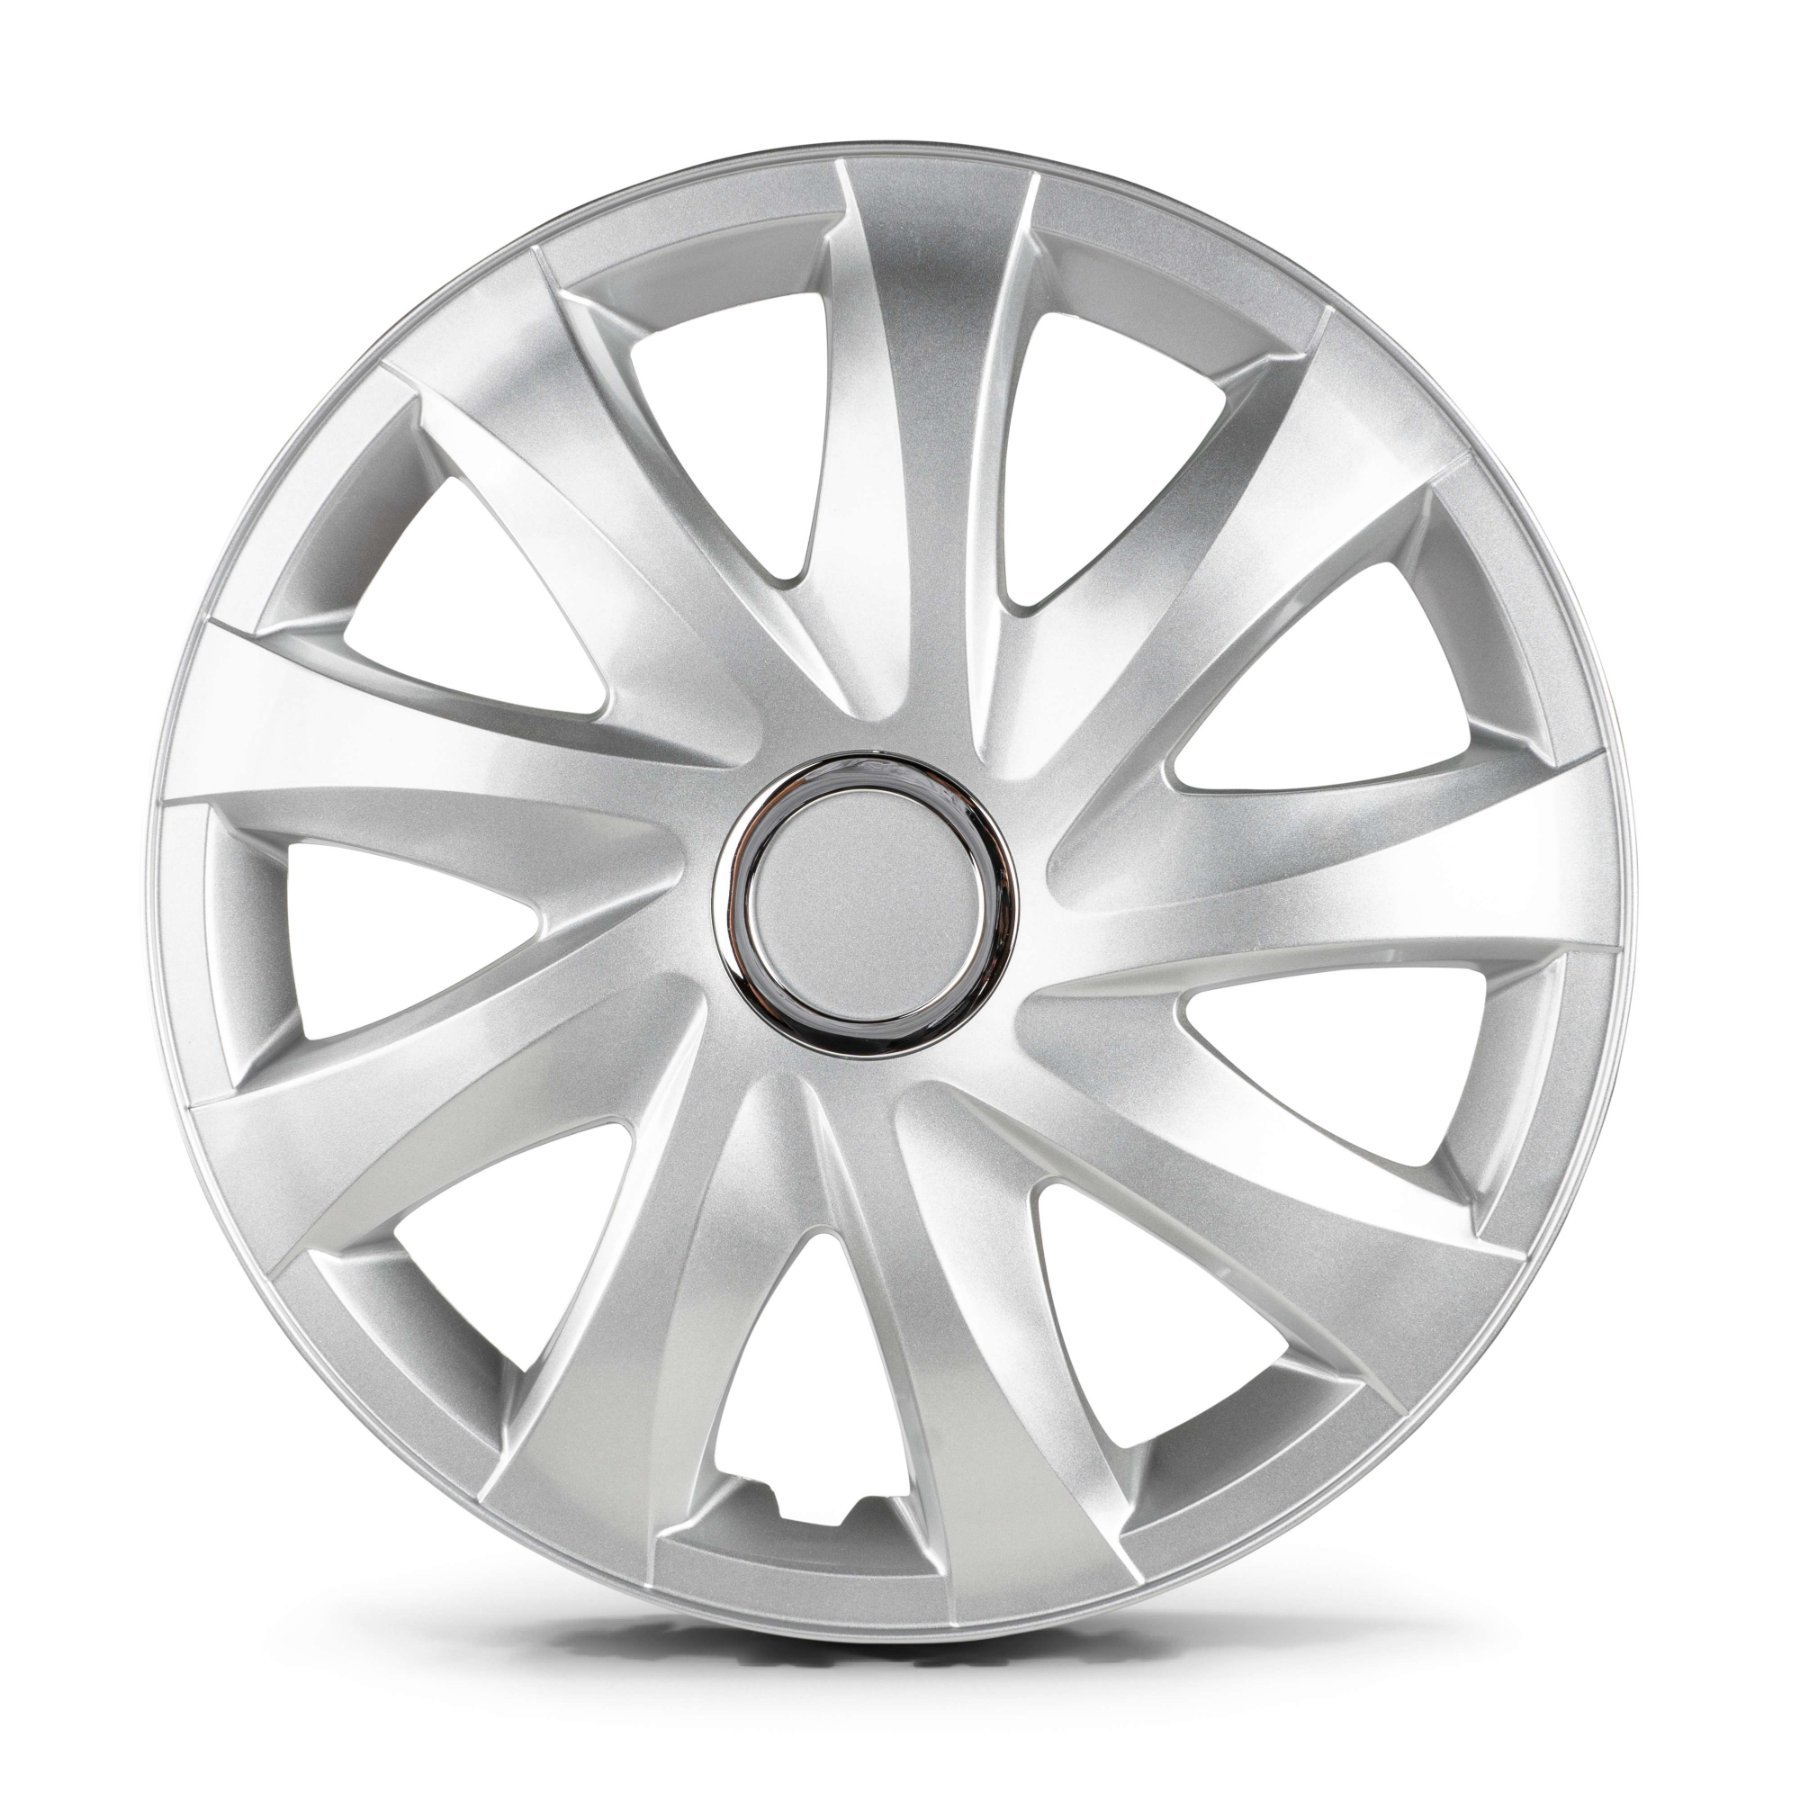 Wheel covers Drifter 15", 4 piece silver